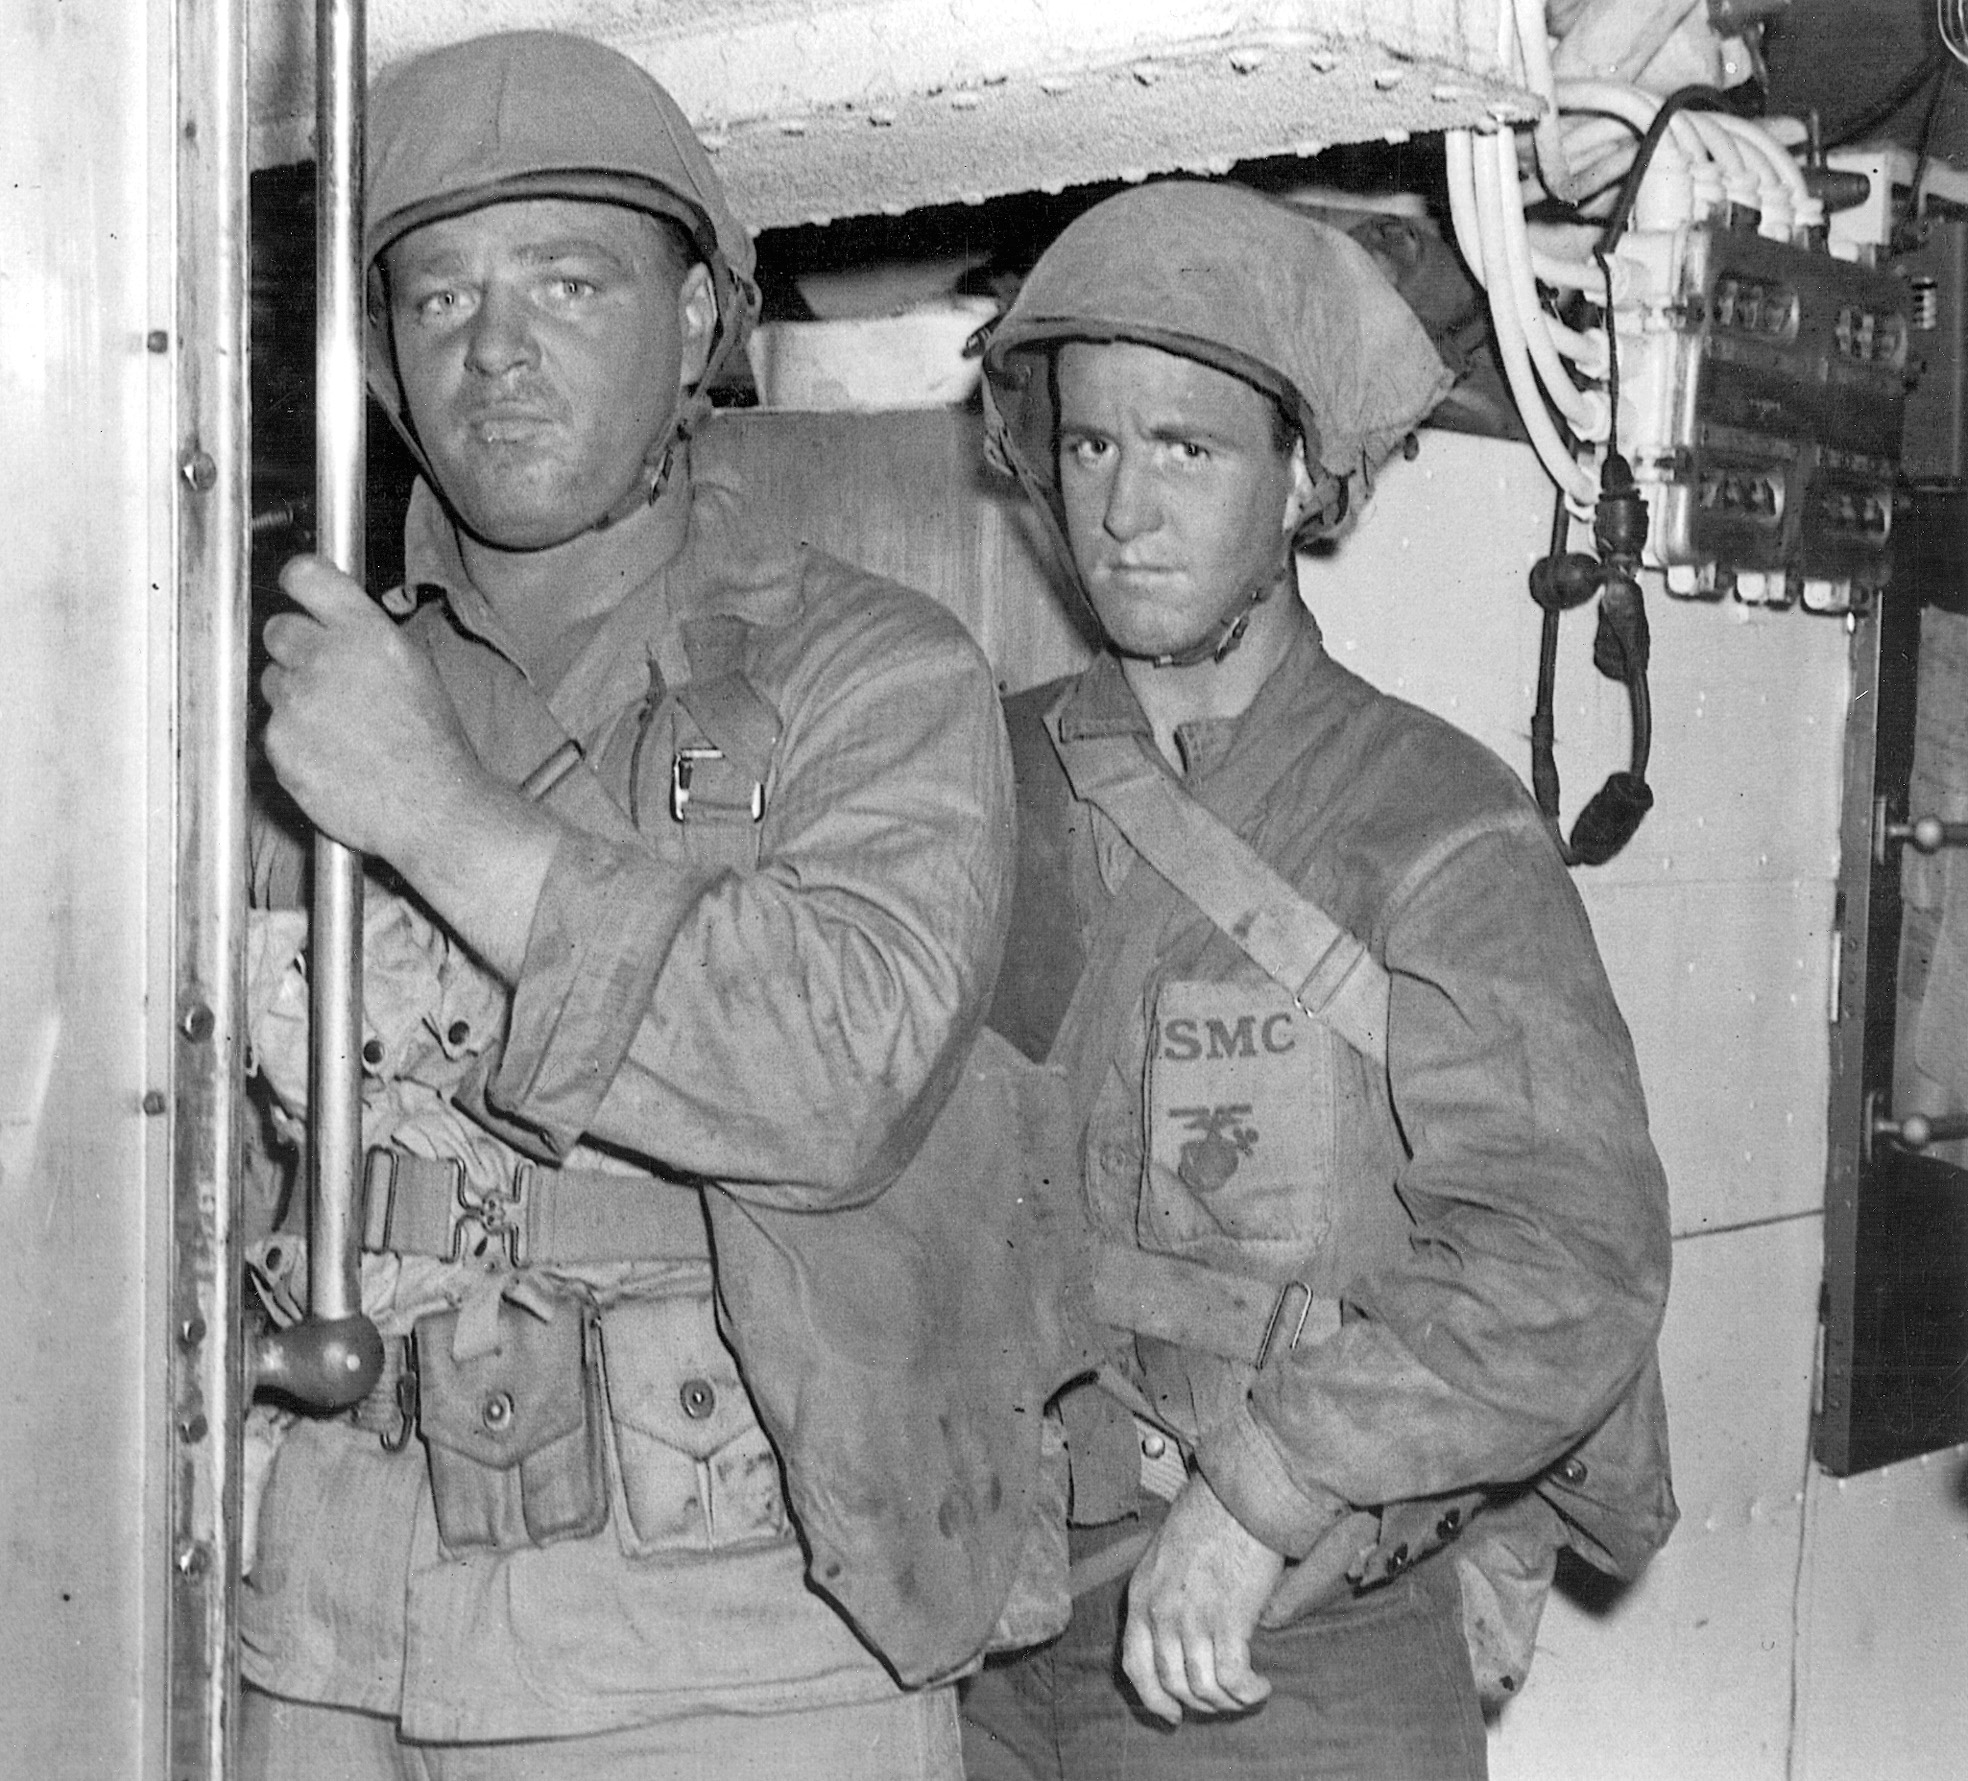 Laden with equipment, a pair of Carlson’s Raiders heads topside aboard the submarine USS Nautilus, their destination Makin Island.